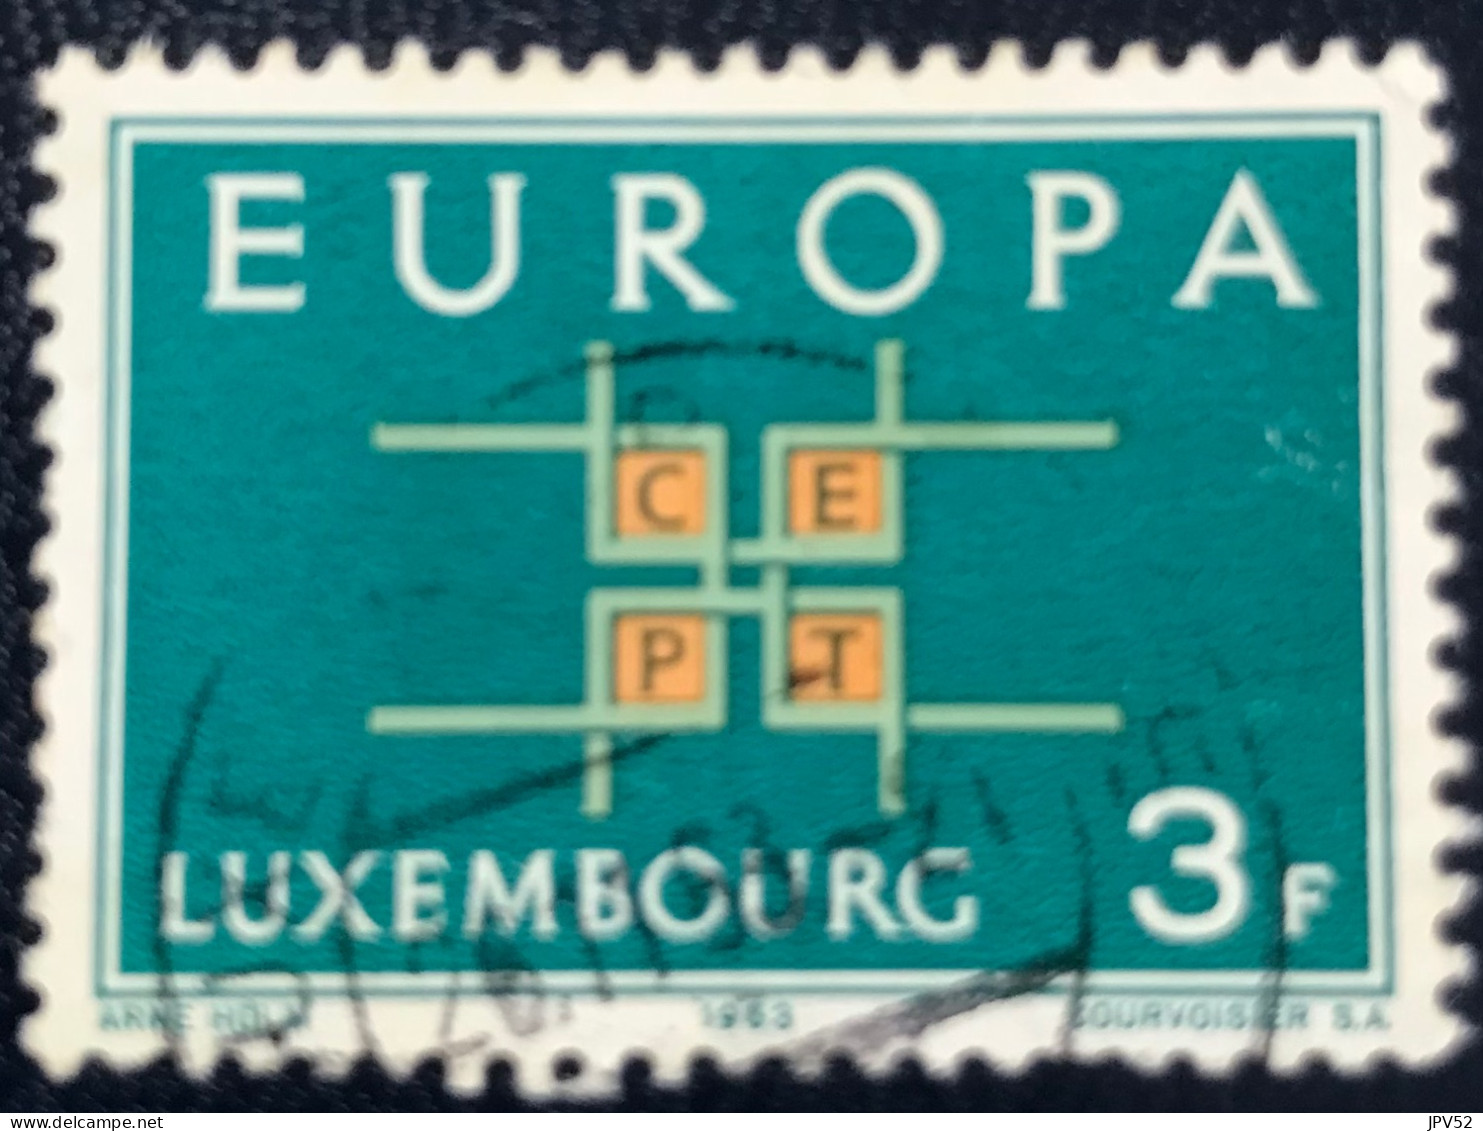 Luxembourg - Luxemburg - C18/31 - 1963 - (°)used - Michel 680 - Europa - CEPT - Usati